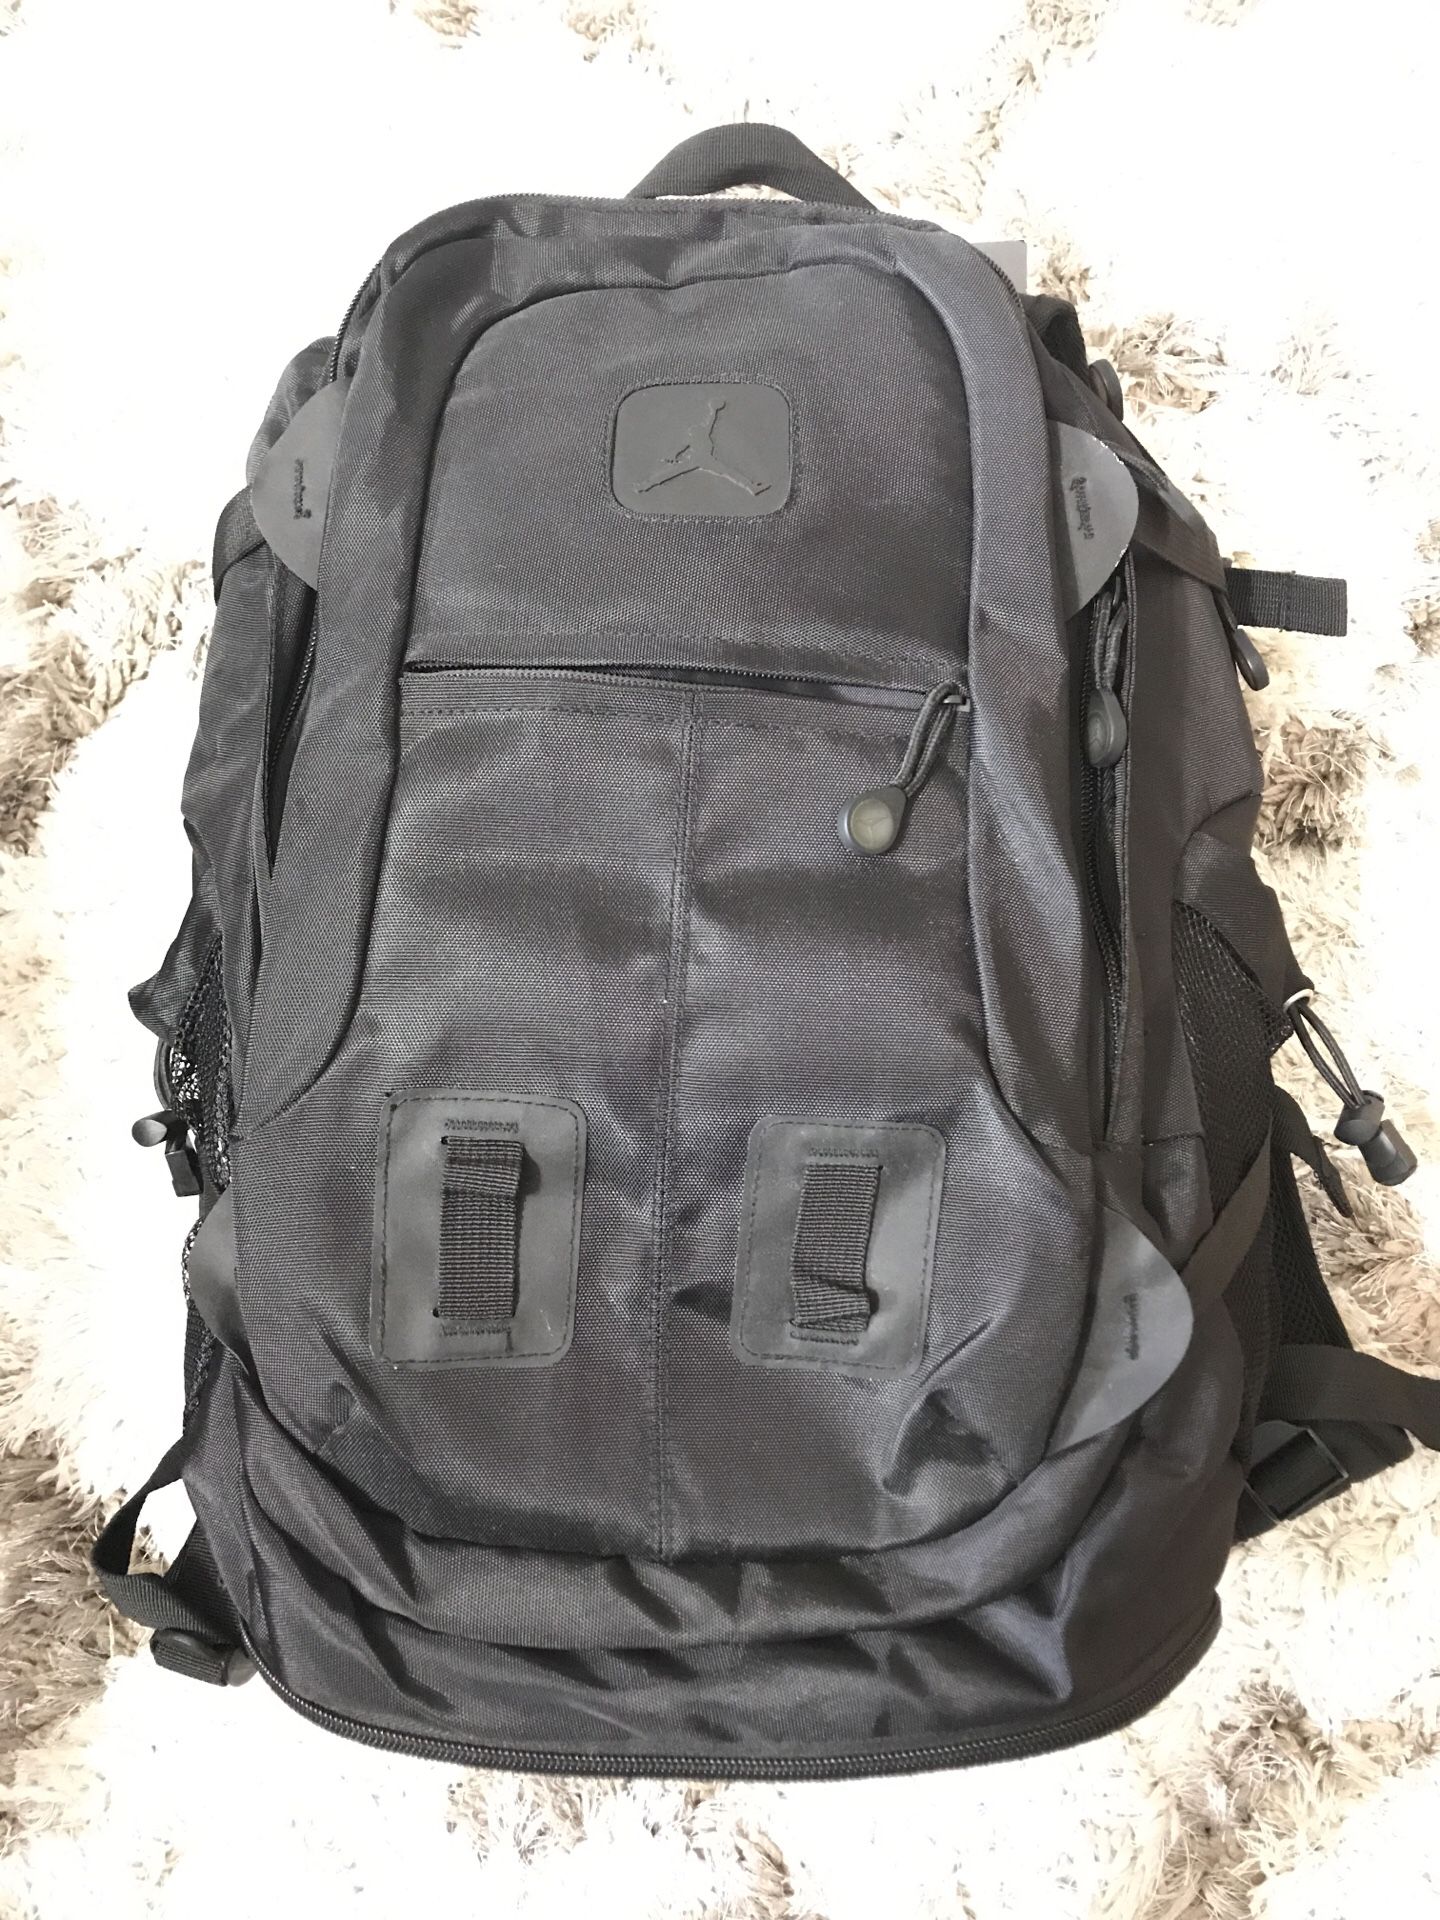 BRAND NEW -Jumpman 23 Air Jordan Backpack (Laptop storage & wet/dry Shoe pocket)